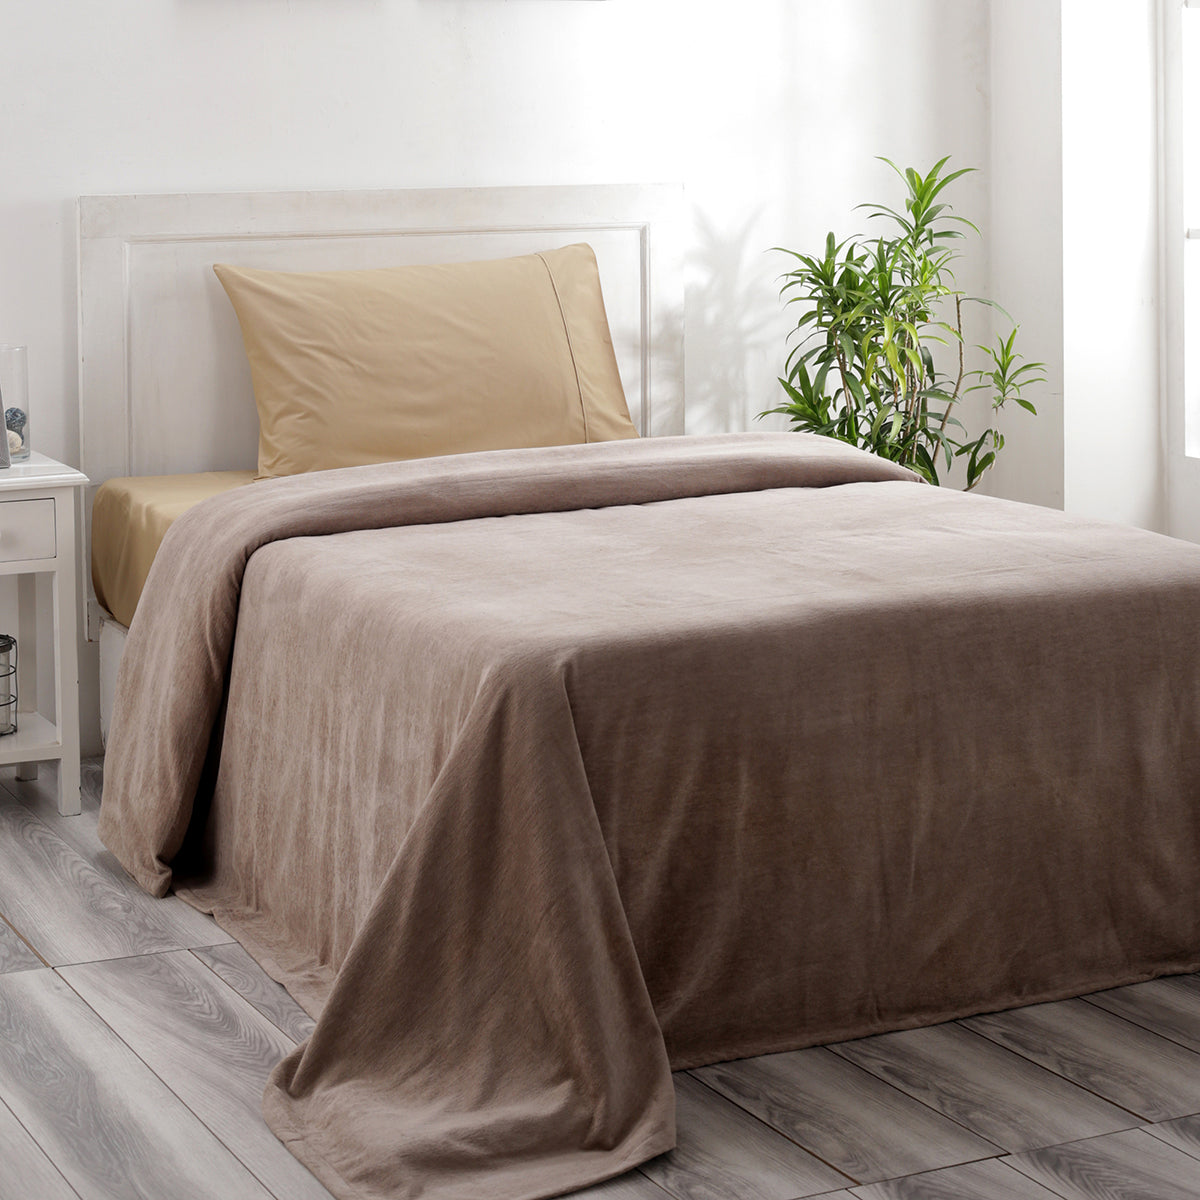 Jessica 100% Cotton Solid Woven Super Soft Ecru Bed Cover/Blanket